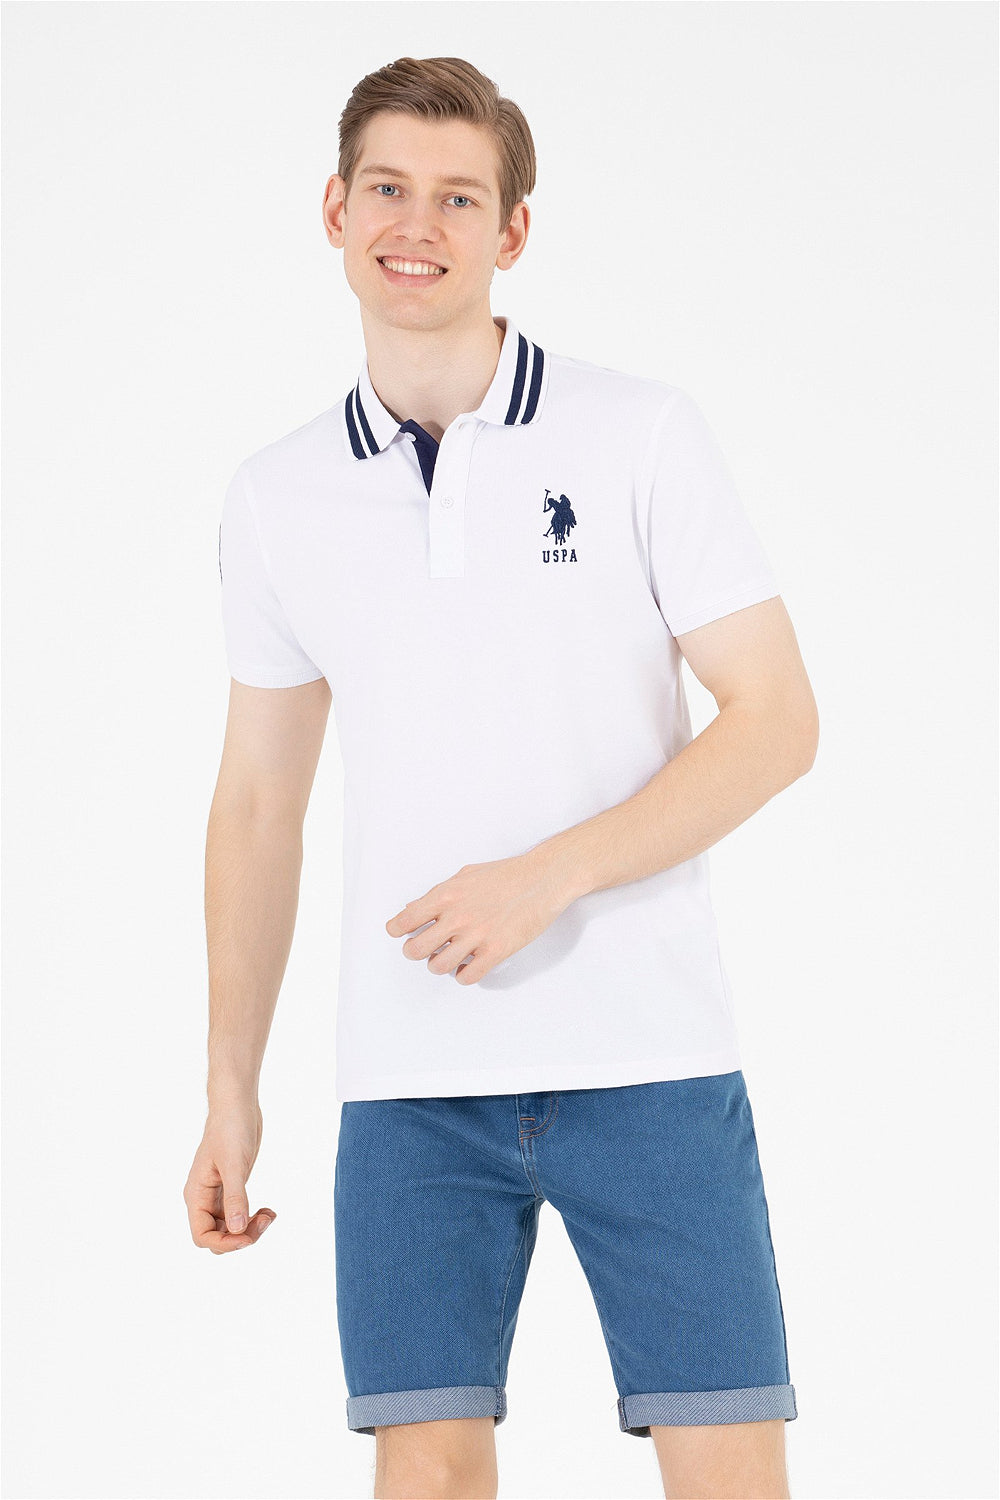 White Short Sleeve Polo Shirt